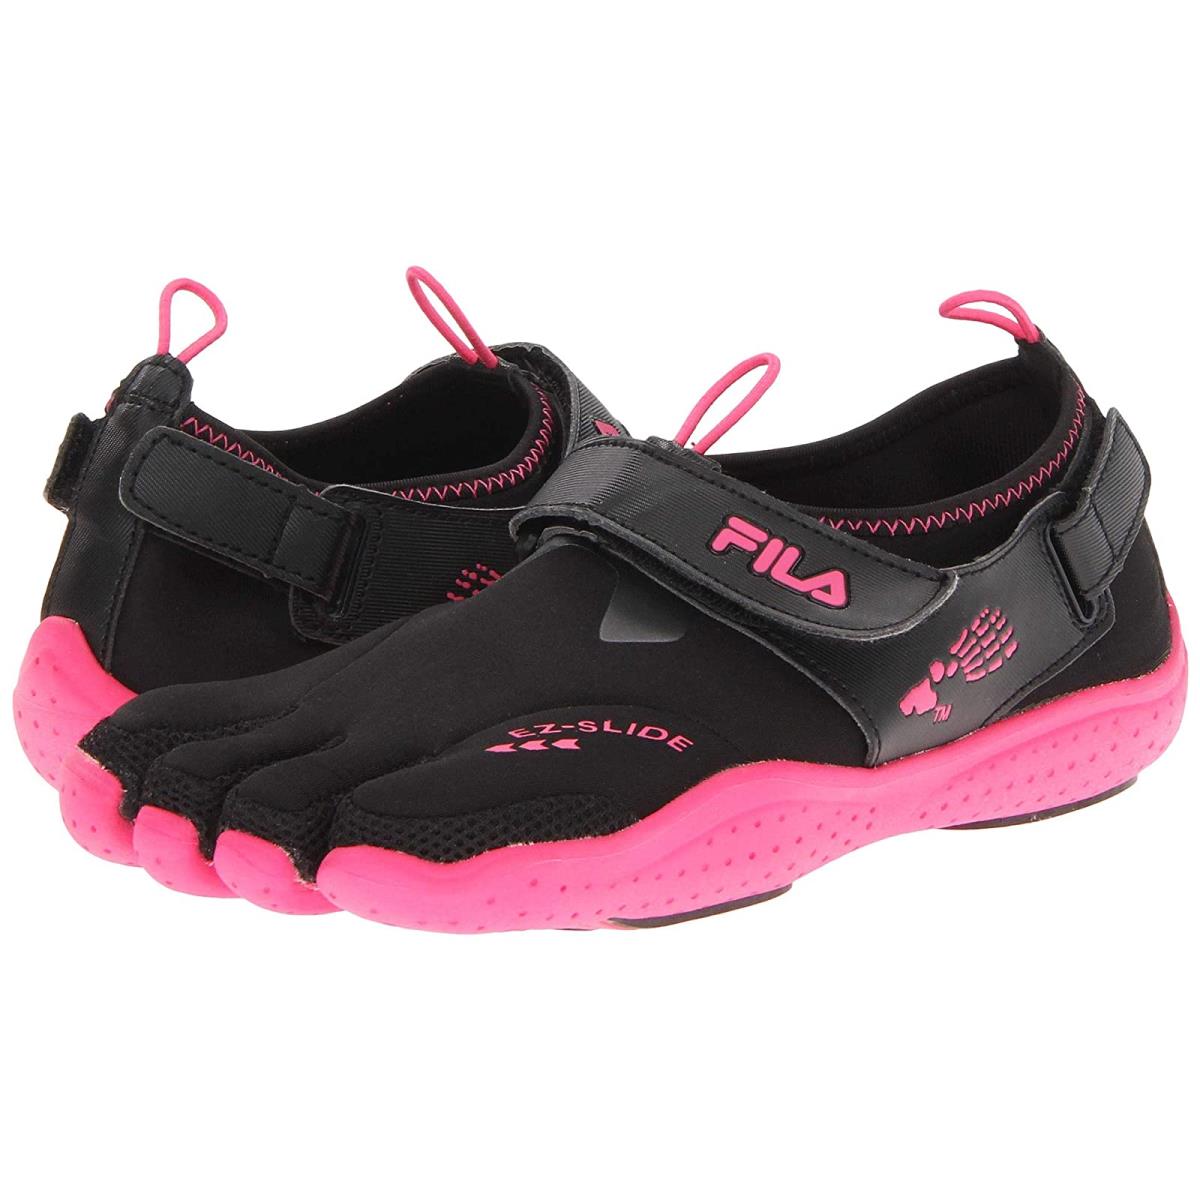 Woman`s Sneakers Athletic Shoes Fila Skele-toes EZ Slide Drainage Black/Hot Pink